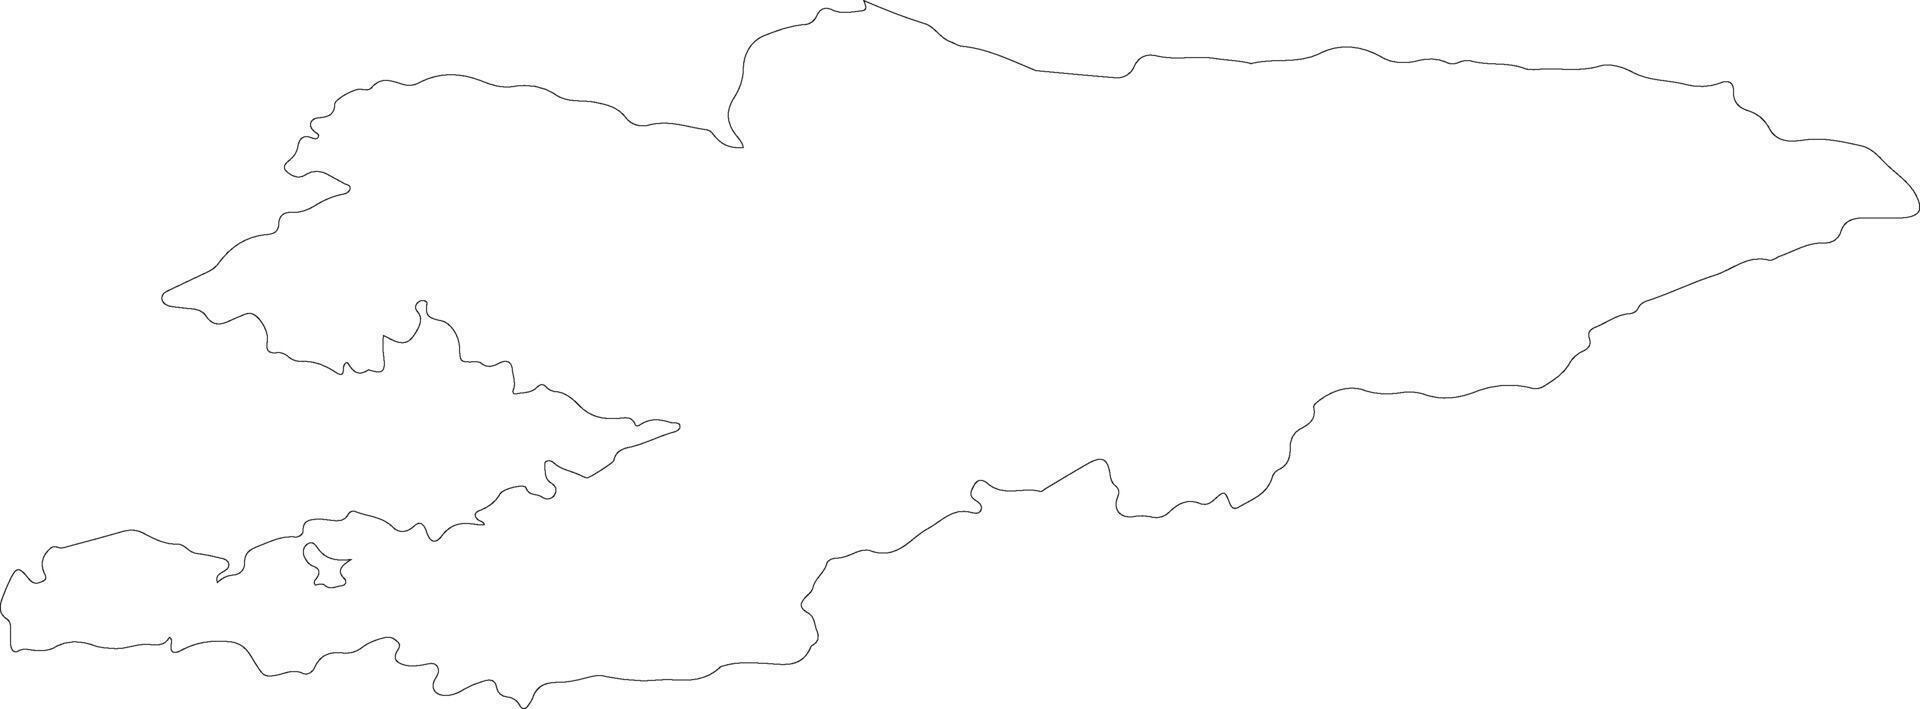 Kyrgyzstan schema carta geografica vettore